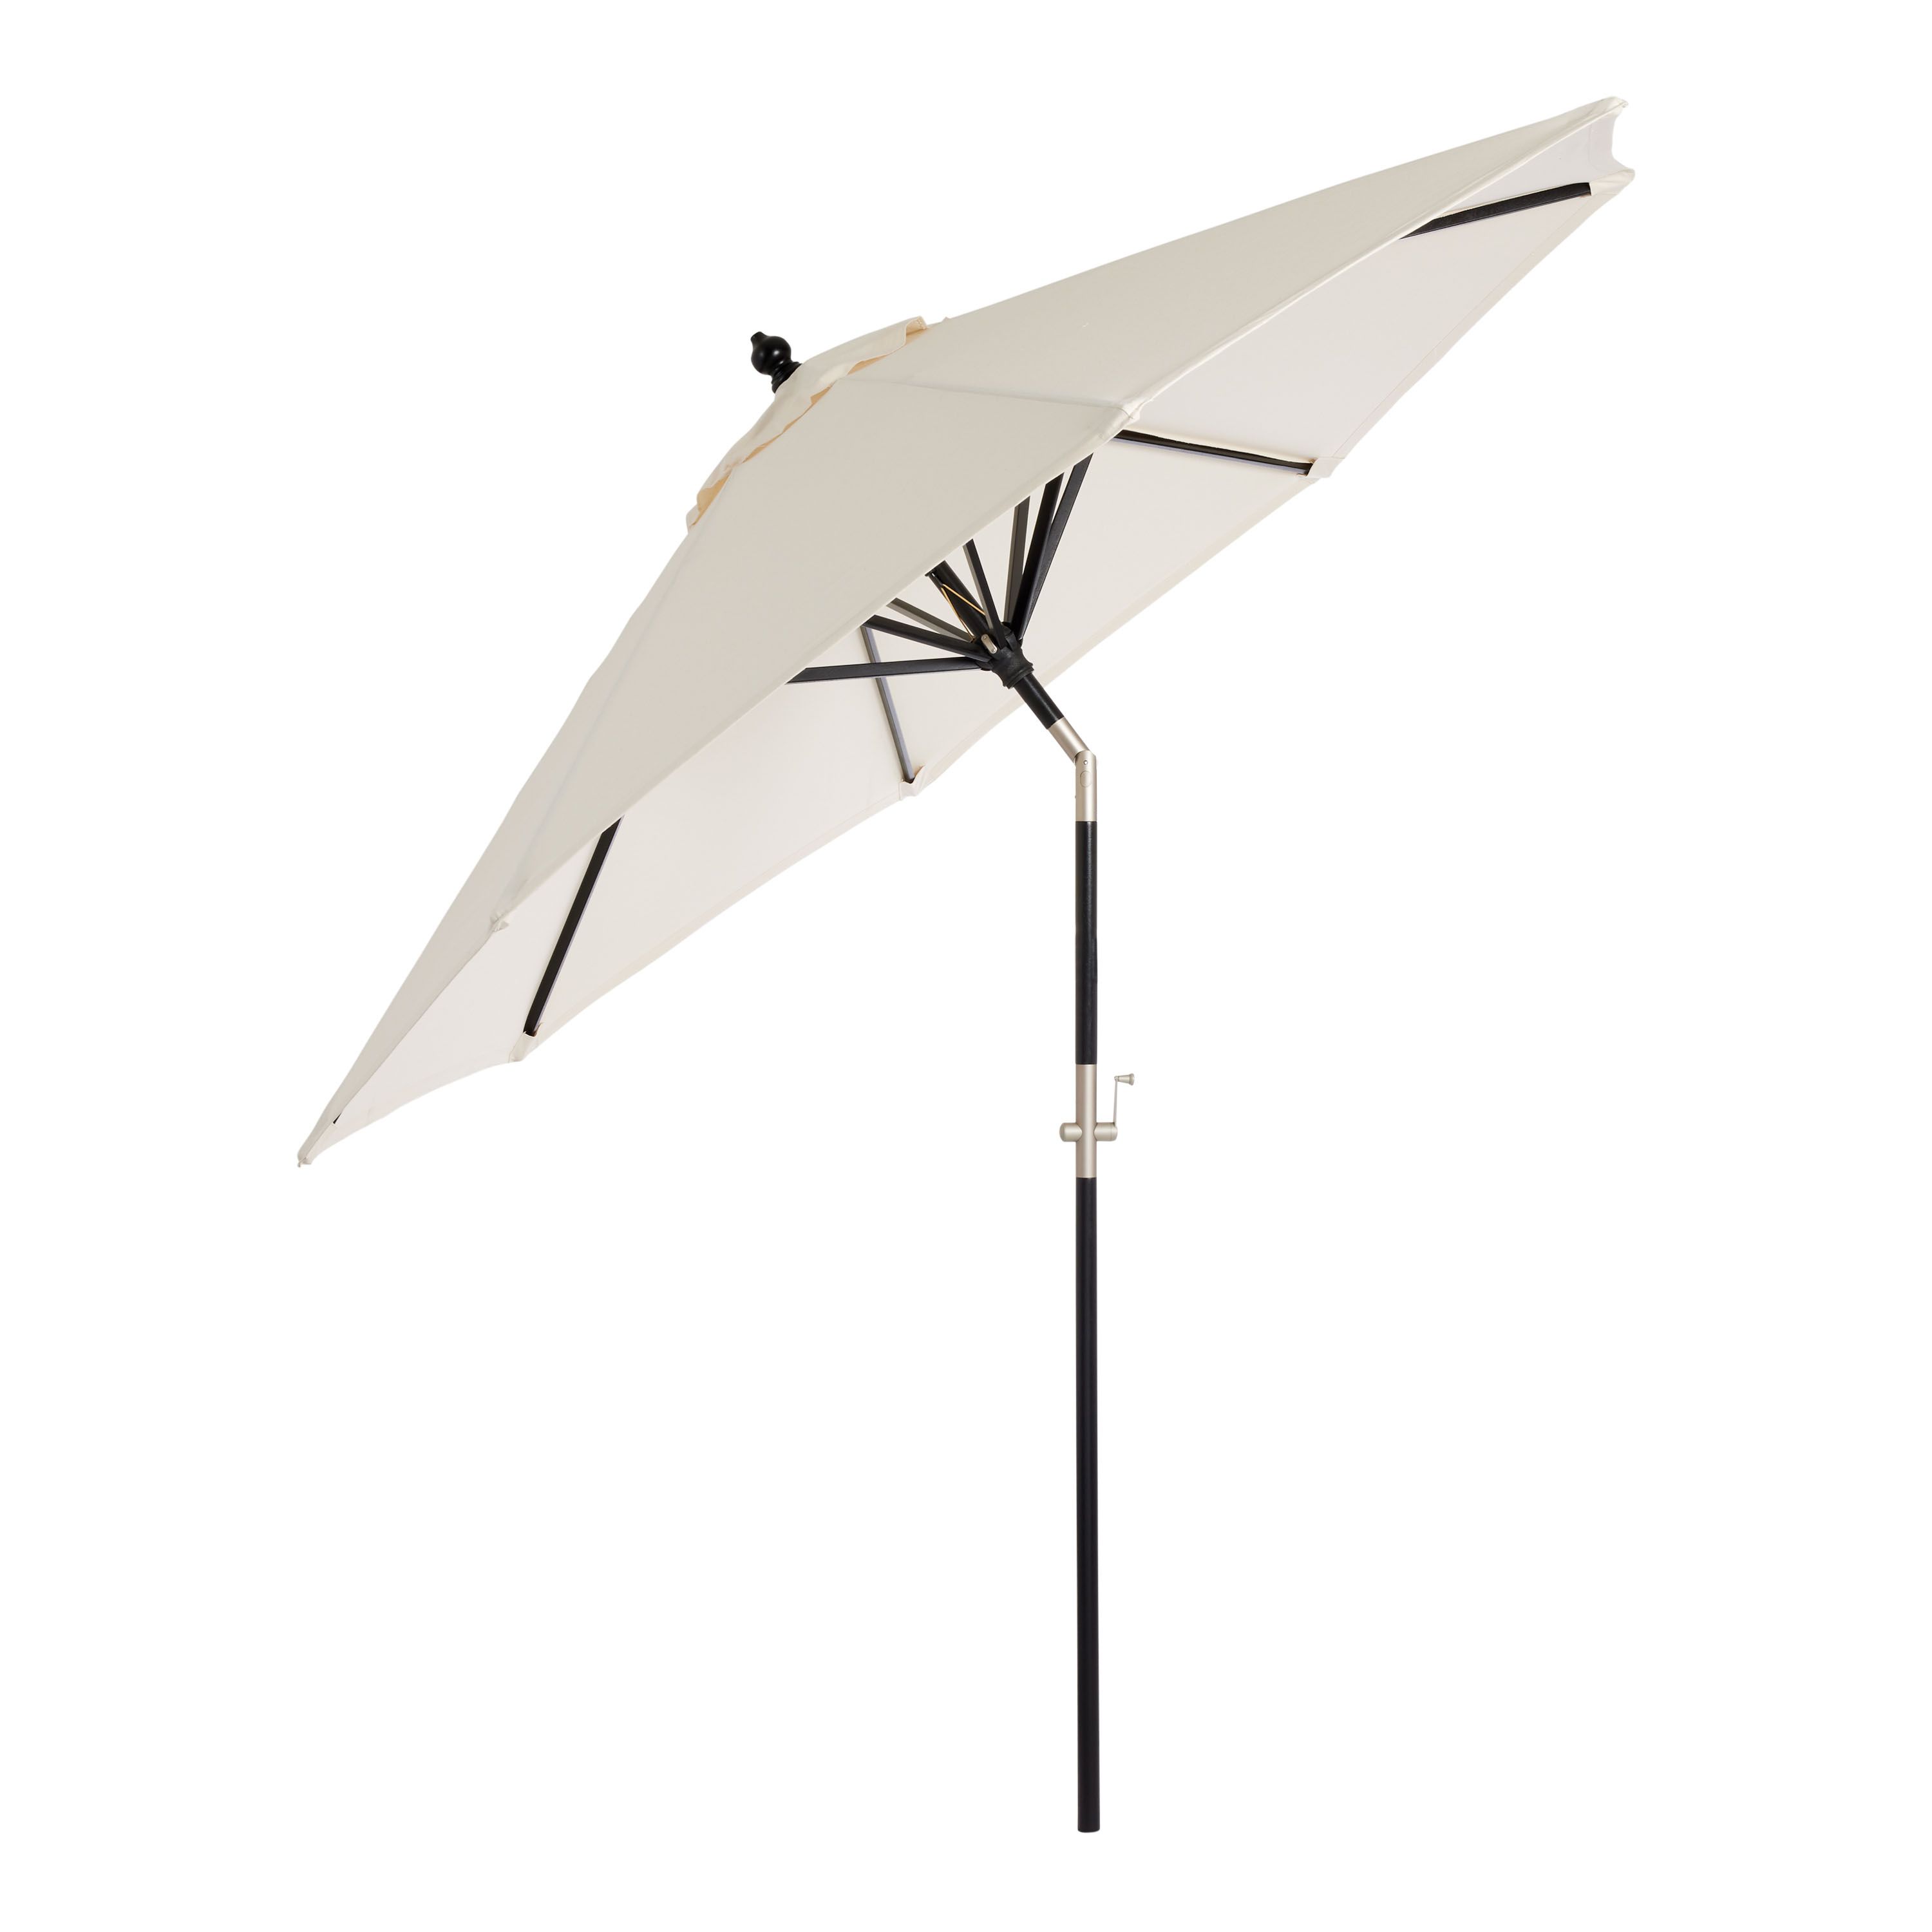 Wood Crank Lift Tilting 9 Ft Patio Umbrella Frame and Pole | World Market